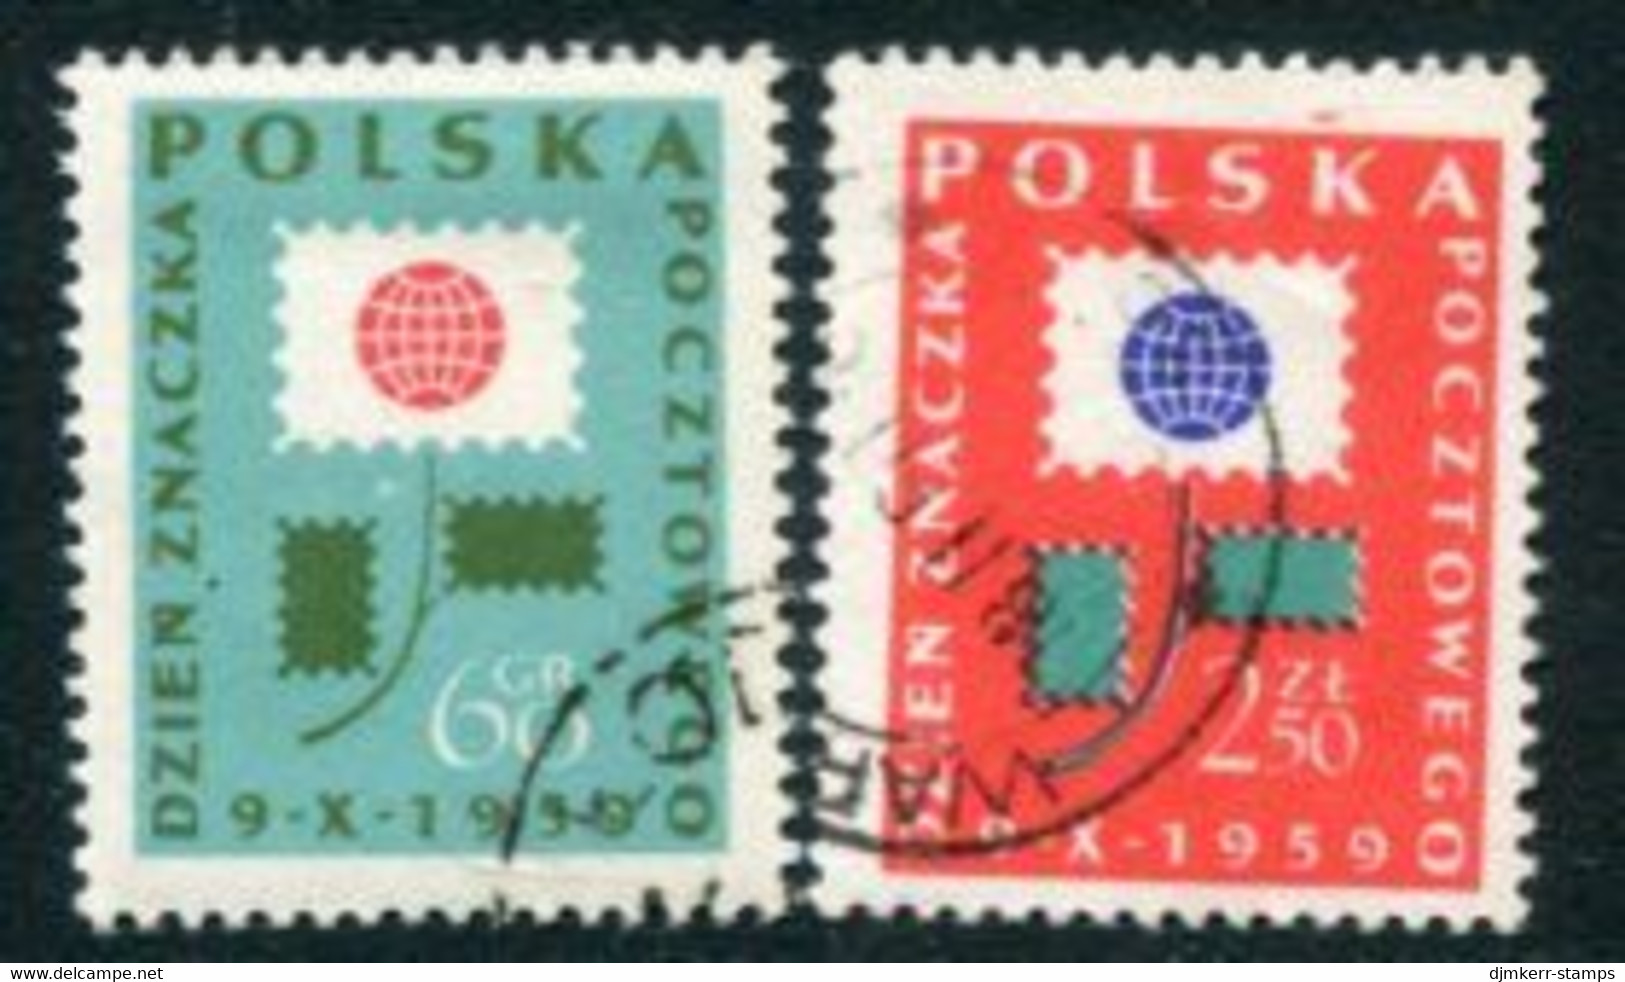 POLAND 1959 Stamp Day Used.  Michel 1125-26 - Usati